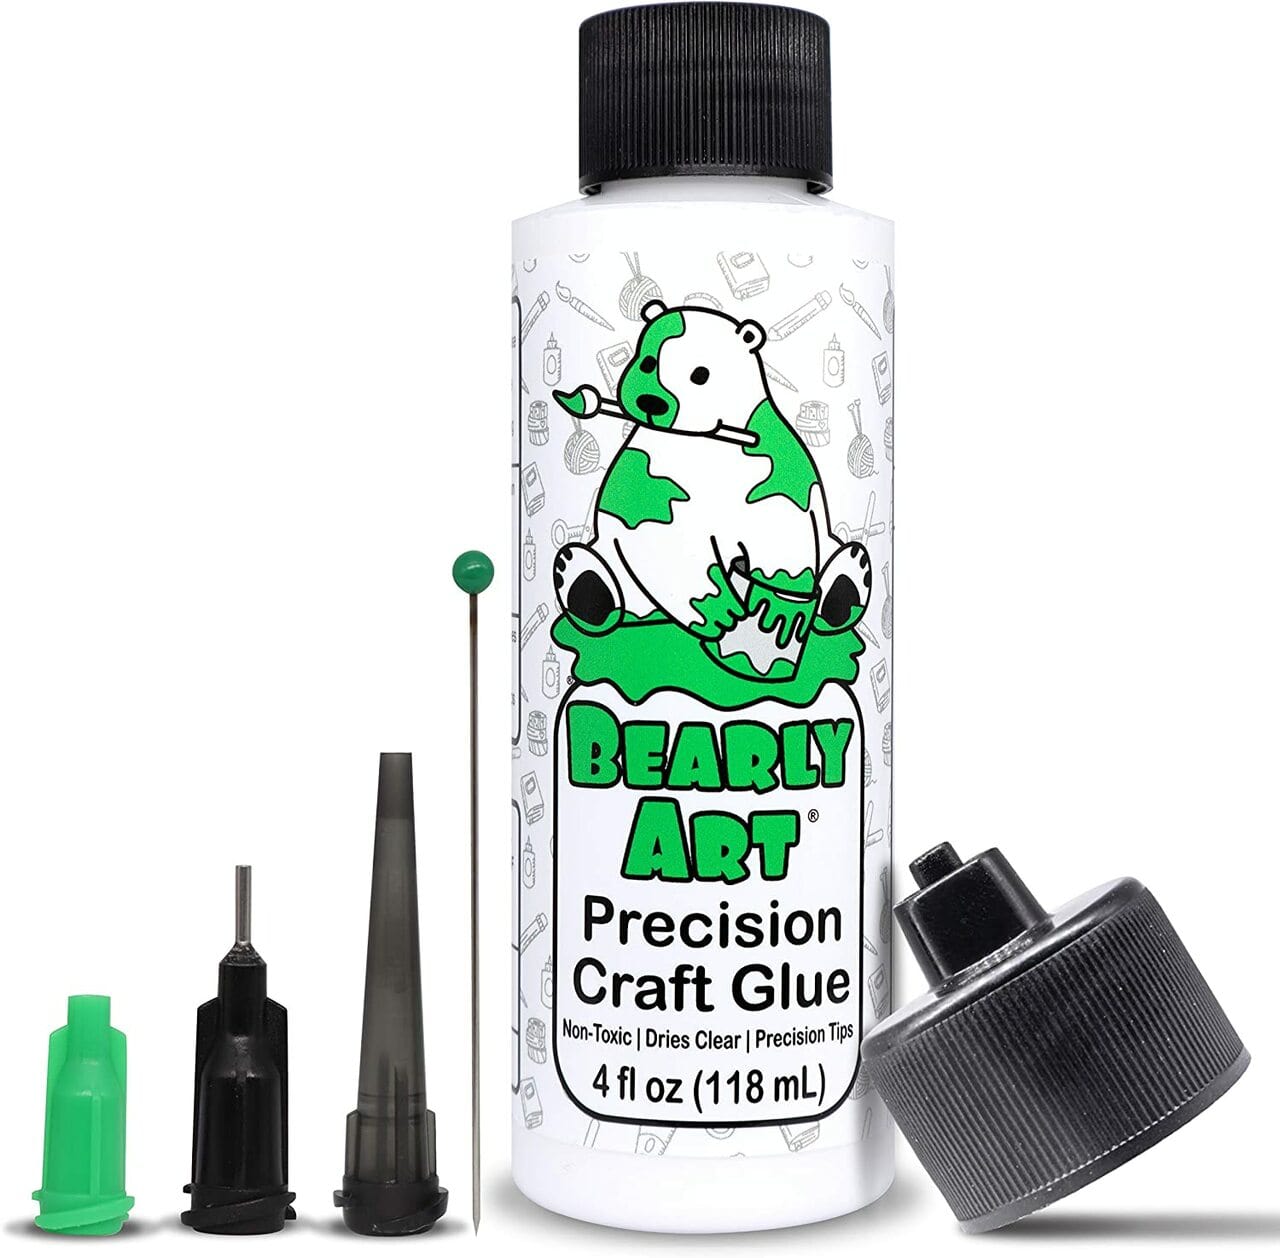 Bearly Art Original 4 fl oz Precision Craft Glue + Tip KitPaper Arts